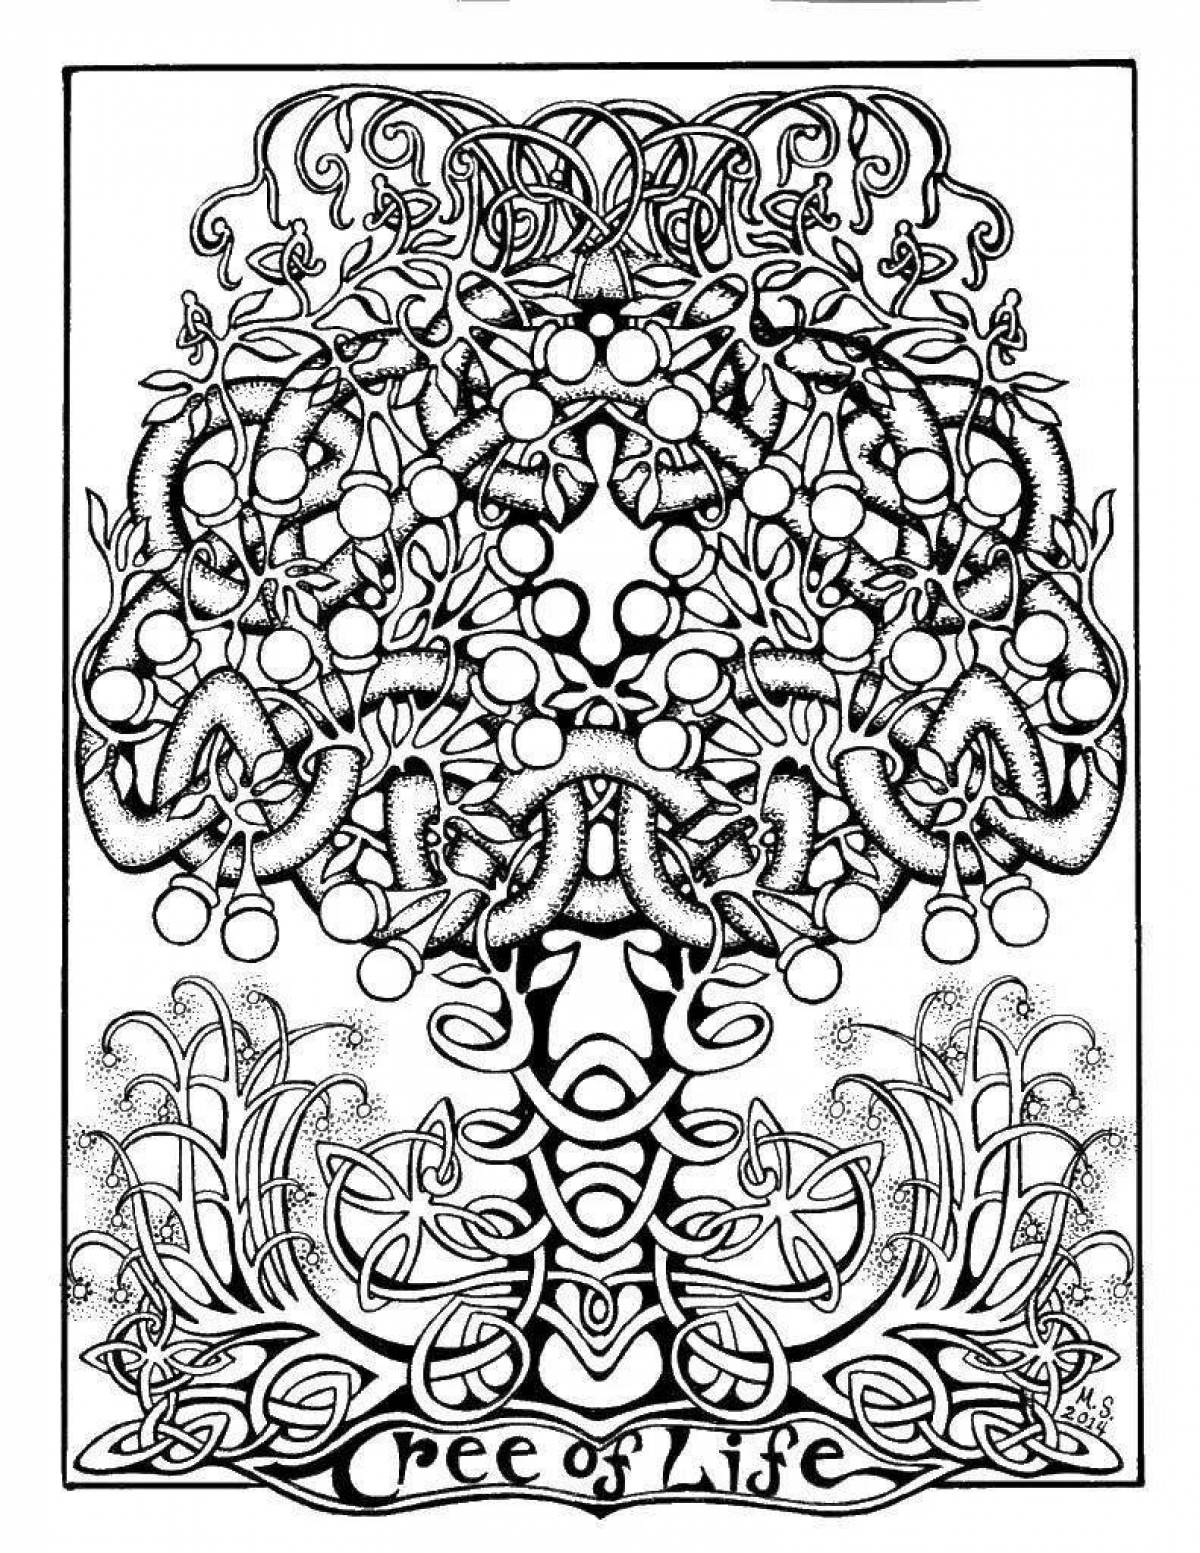 Royal tree of life coloring page